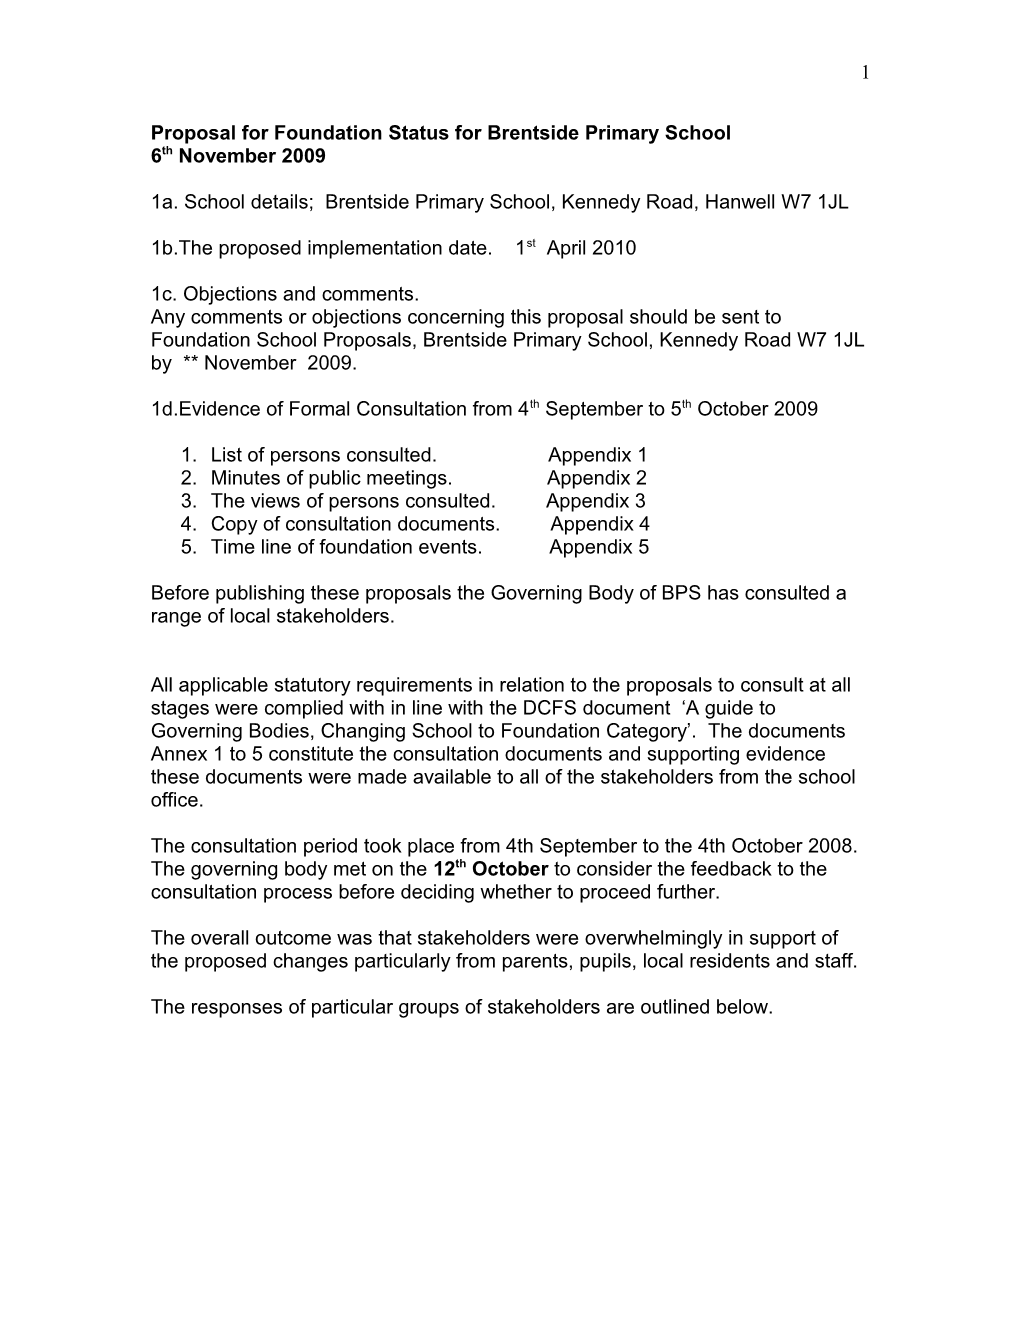 Draft Foundation Proposals for Brentside Primary School October 2009